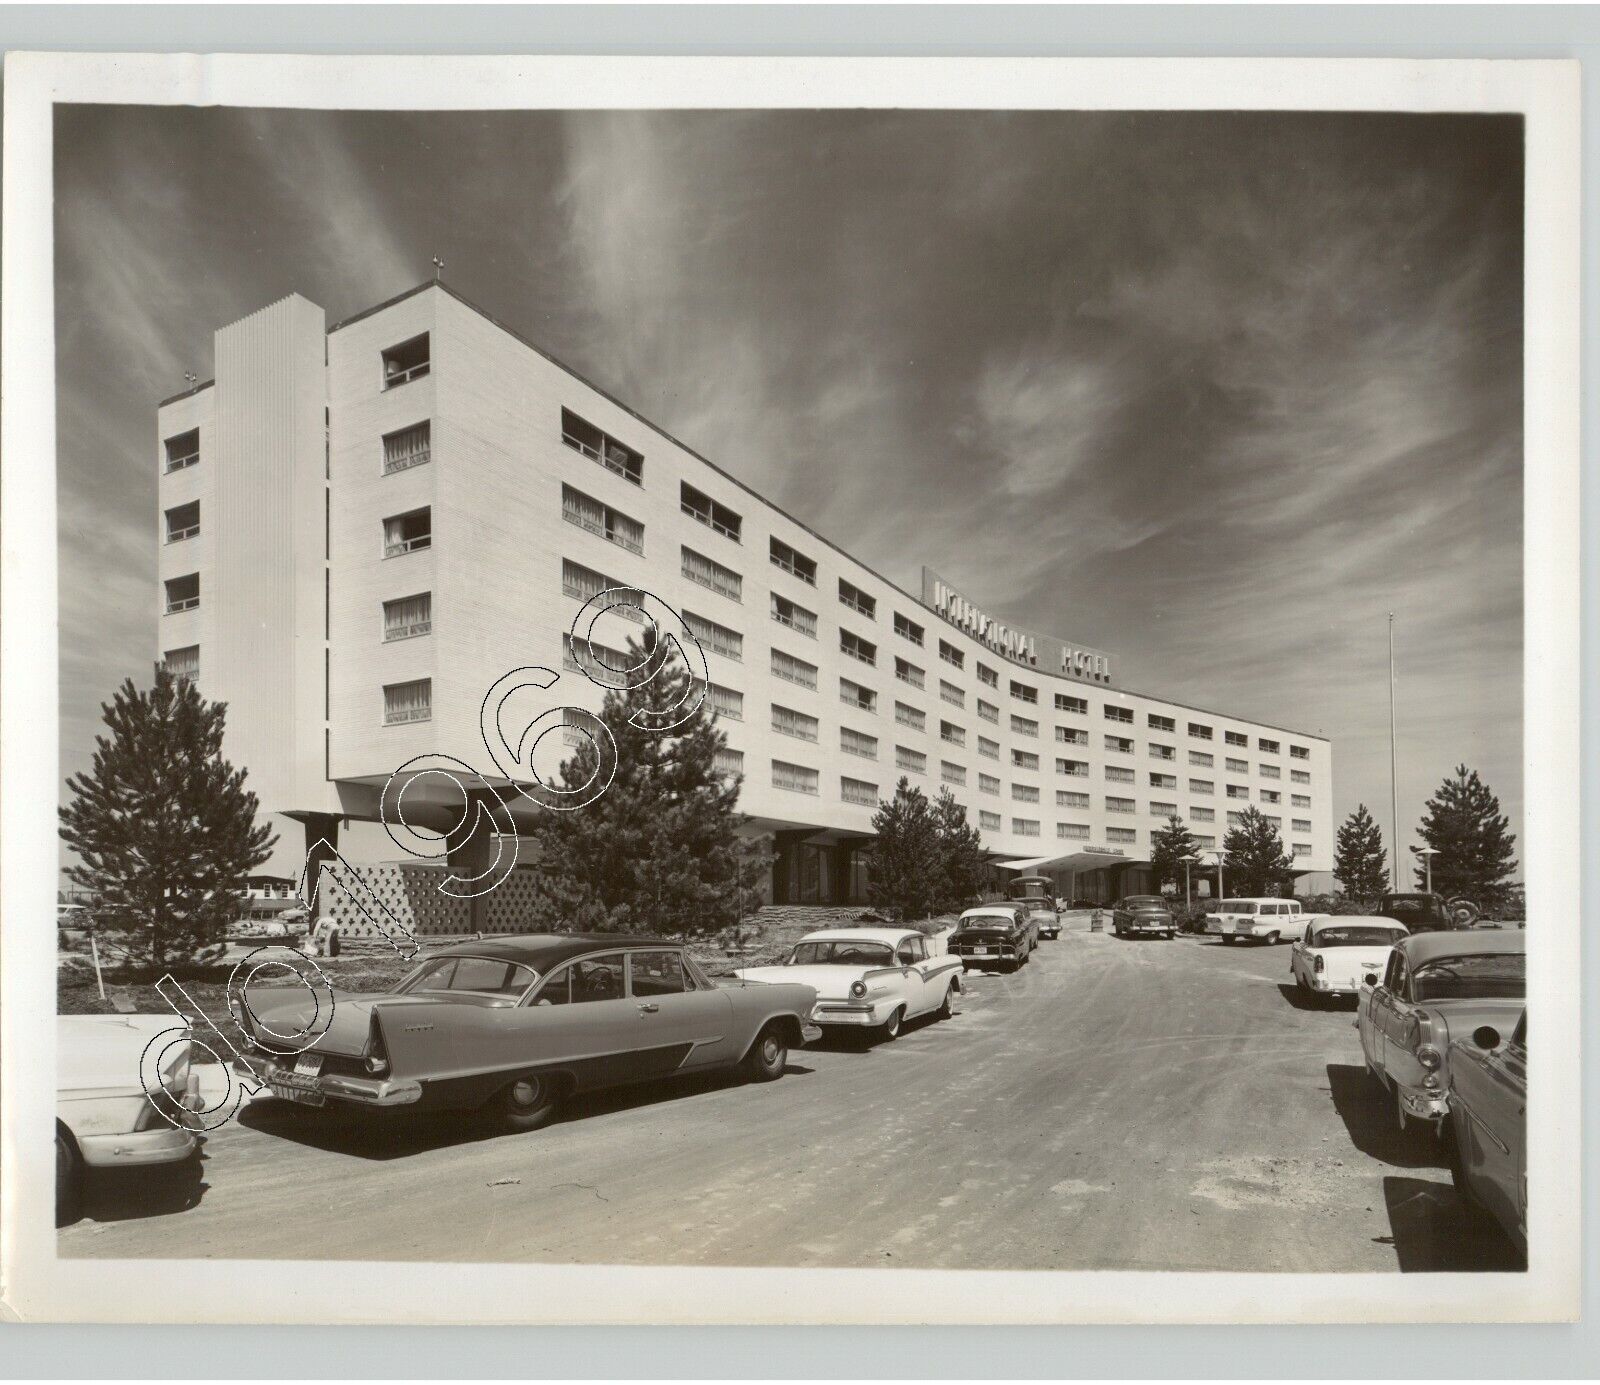 MCM INTERNATIONAL HOTEL Exterior Architecture & Cars, Vtg. 1950s Press Photo